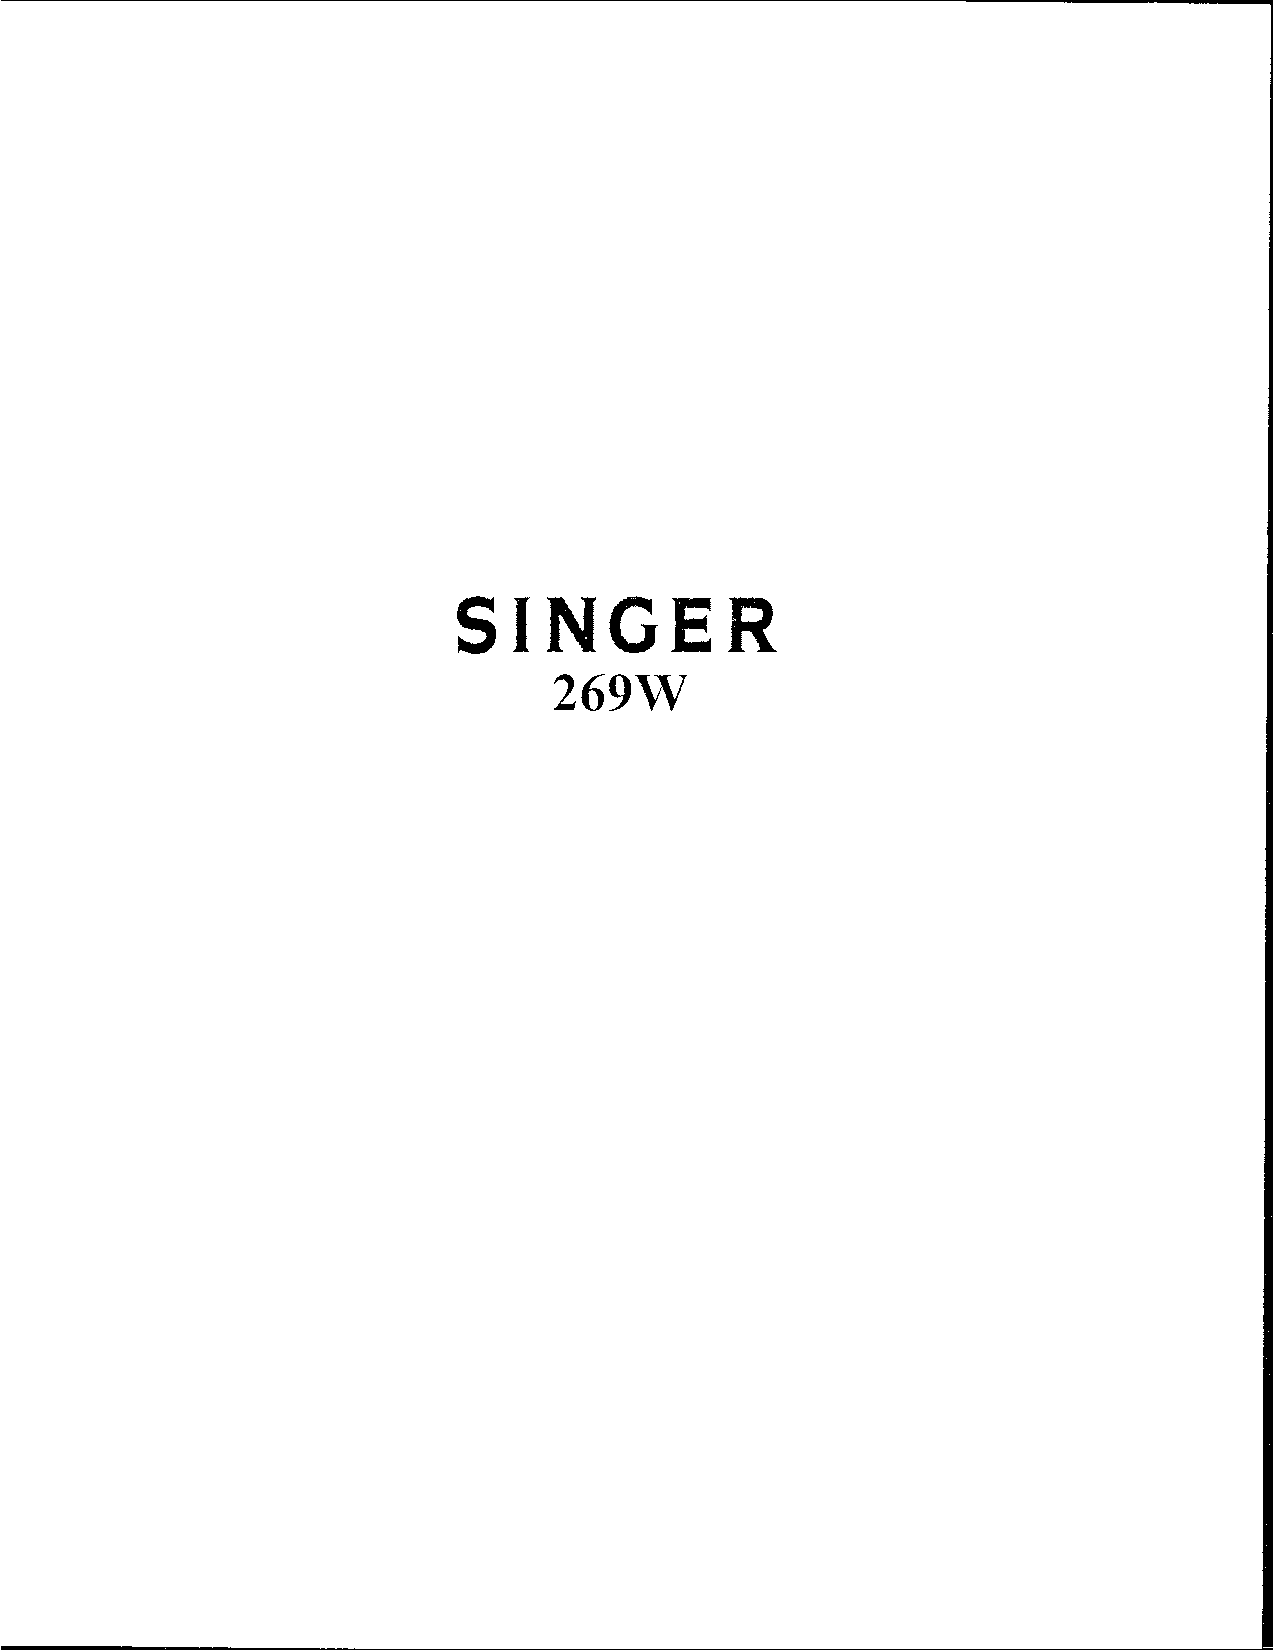 Singer 269W User Manual